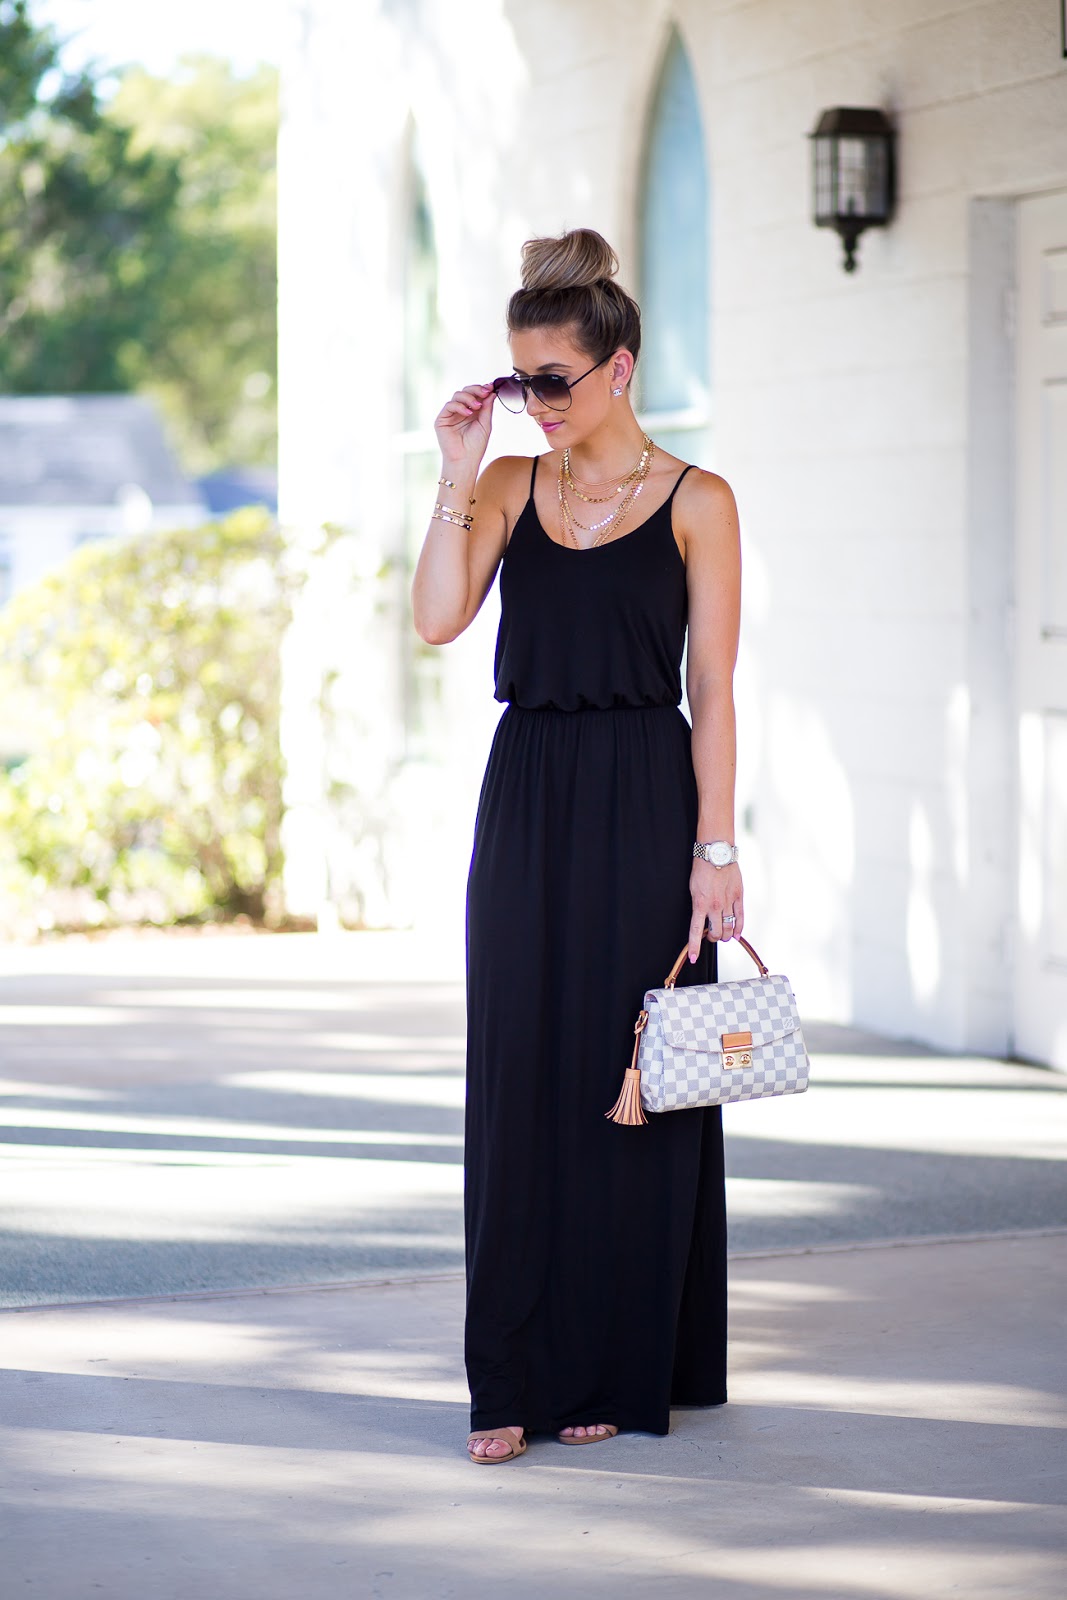 Classic Black Maxi Dress Under $40! - Laura Beverlin